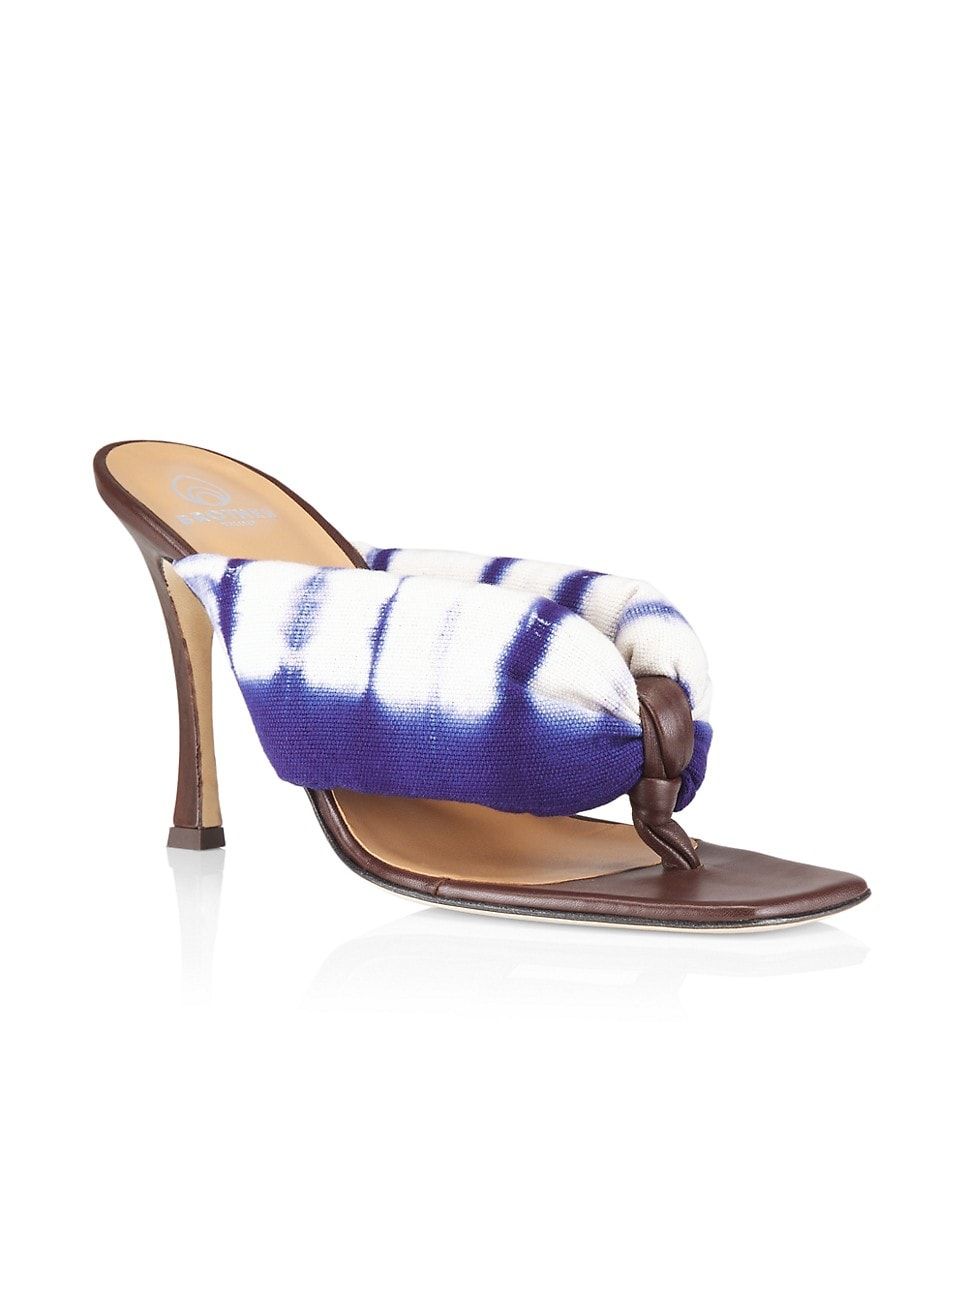 Togo Tie-Dye High-Heel Sandals | Saks Fifth Avenue